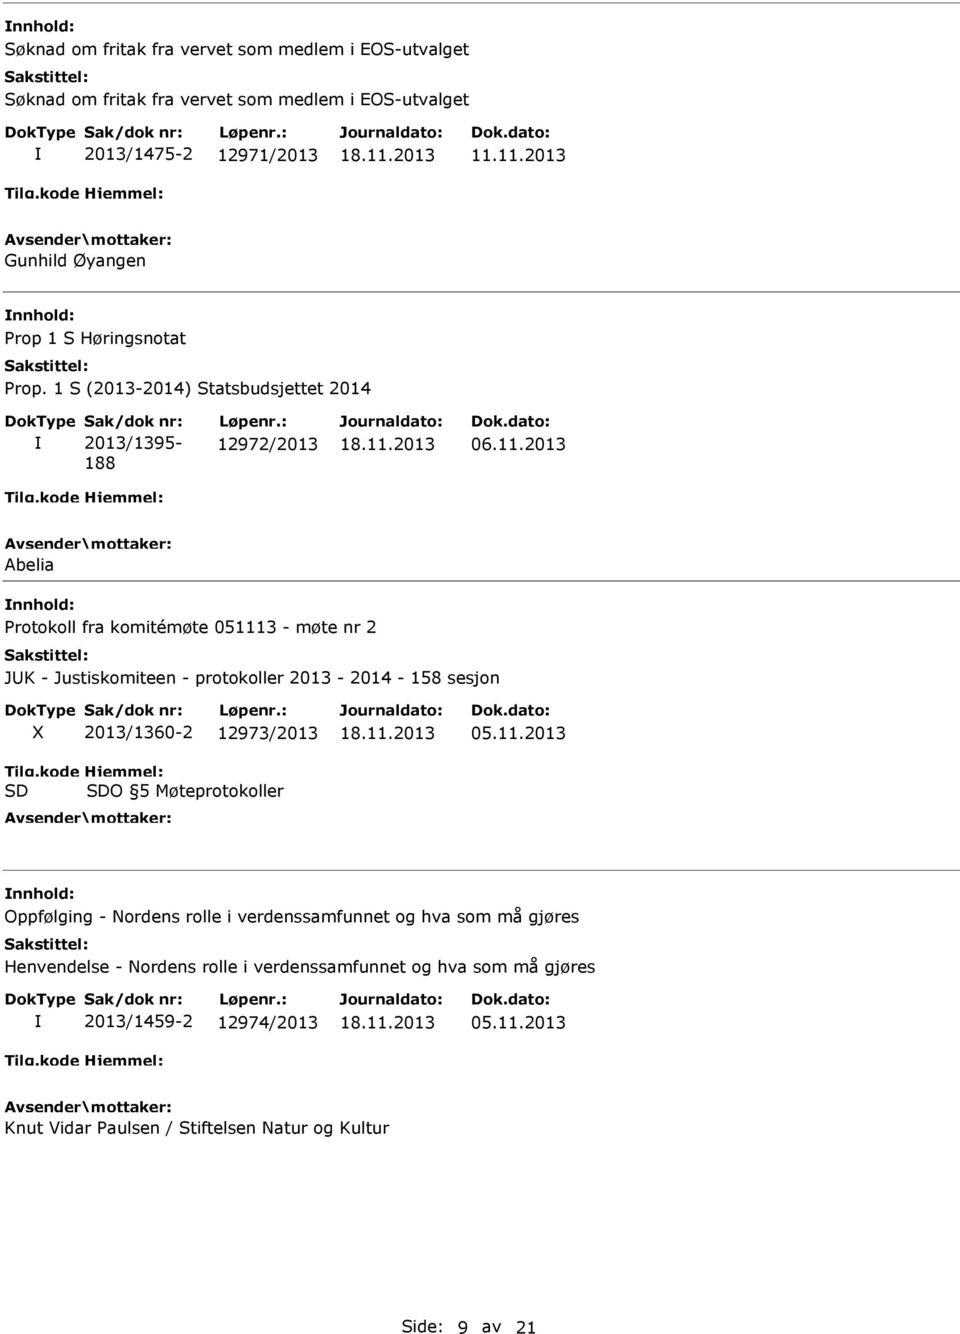 Justiskomiteen - protokoller 2013-2014 - 158 sesjon 2013/1360-2 12973/2013 O 5 Møteprotokoller 05.11.